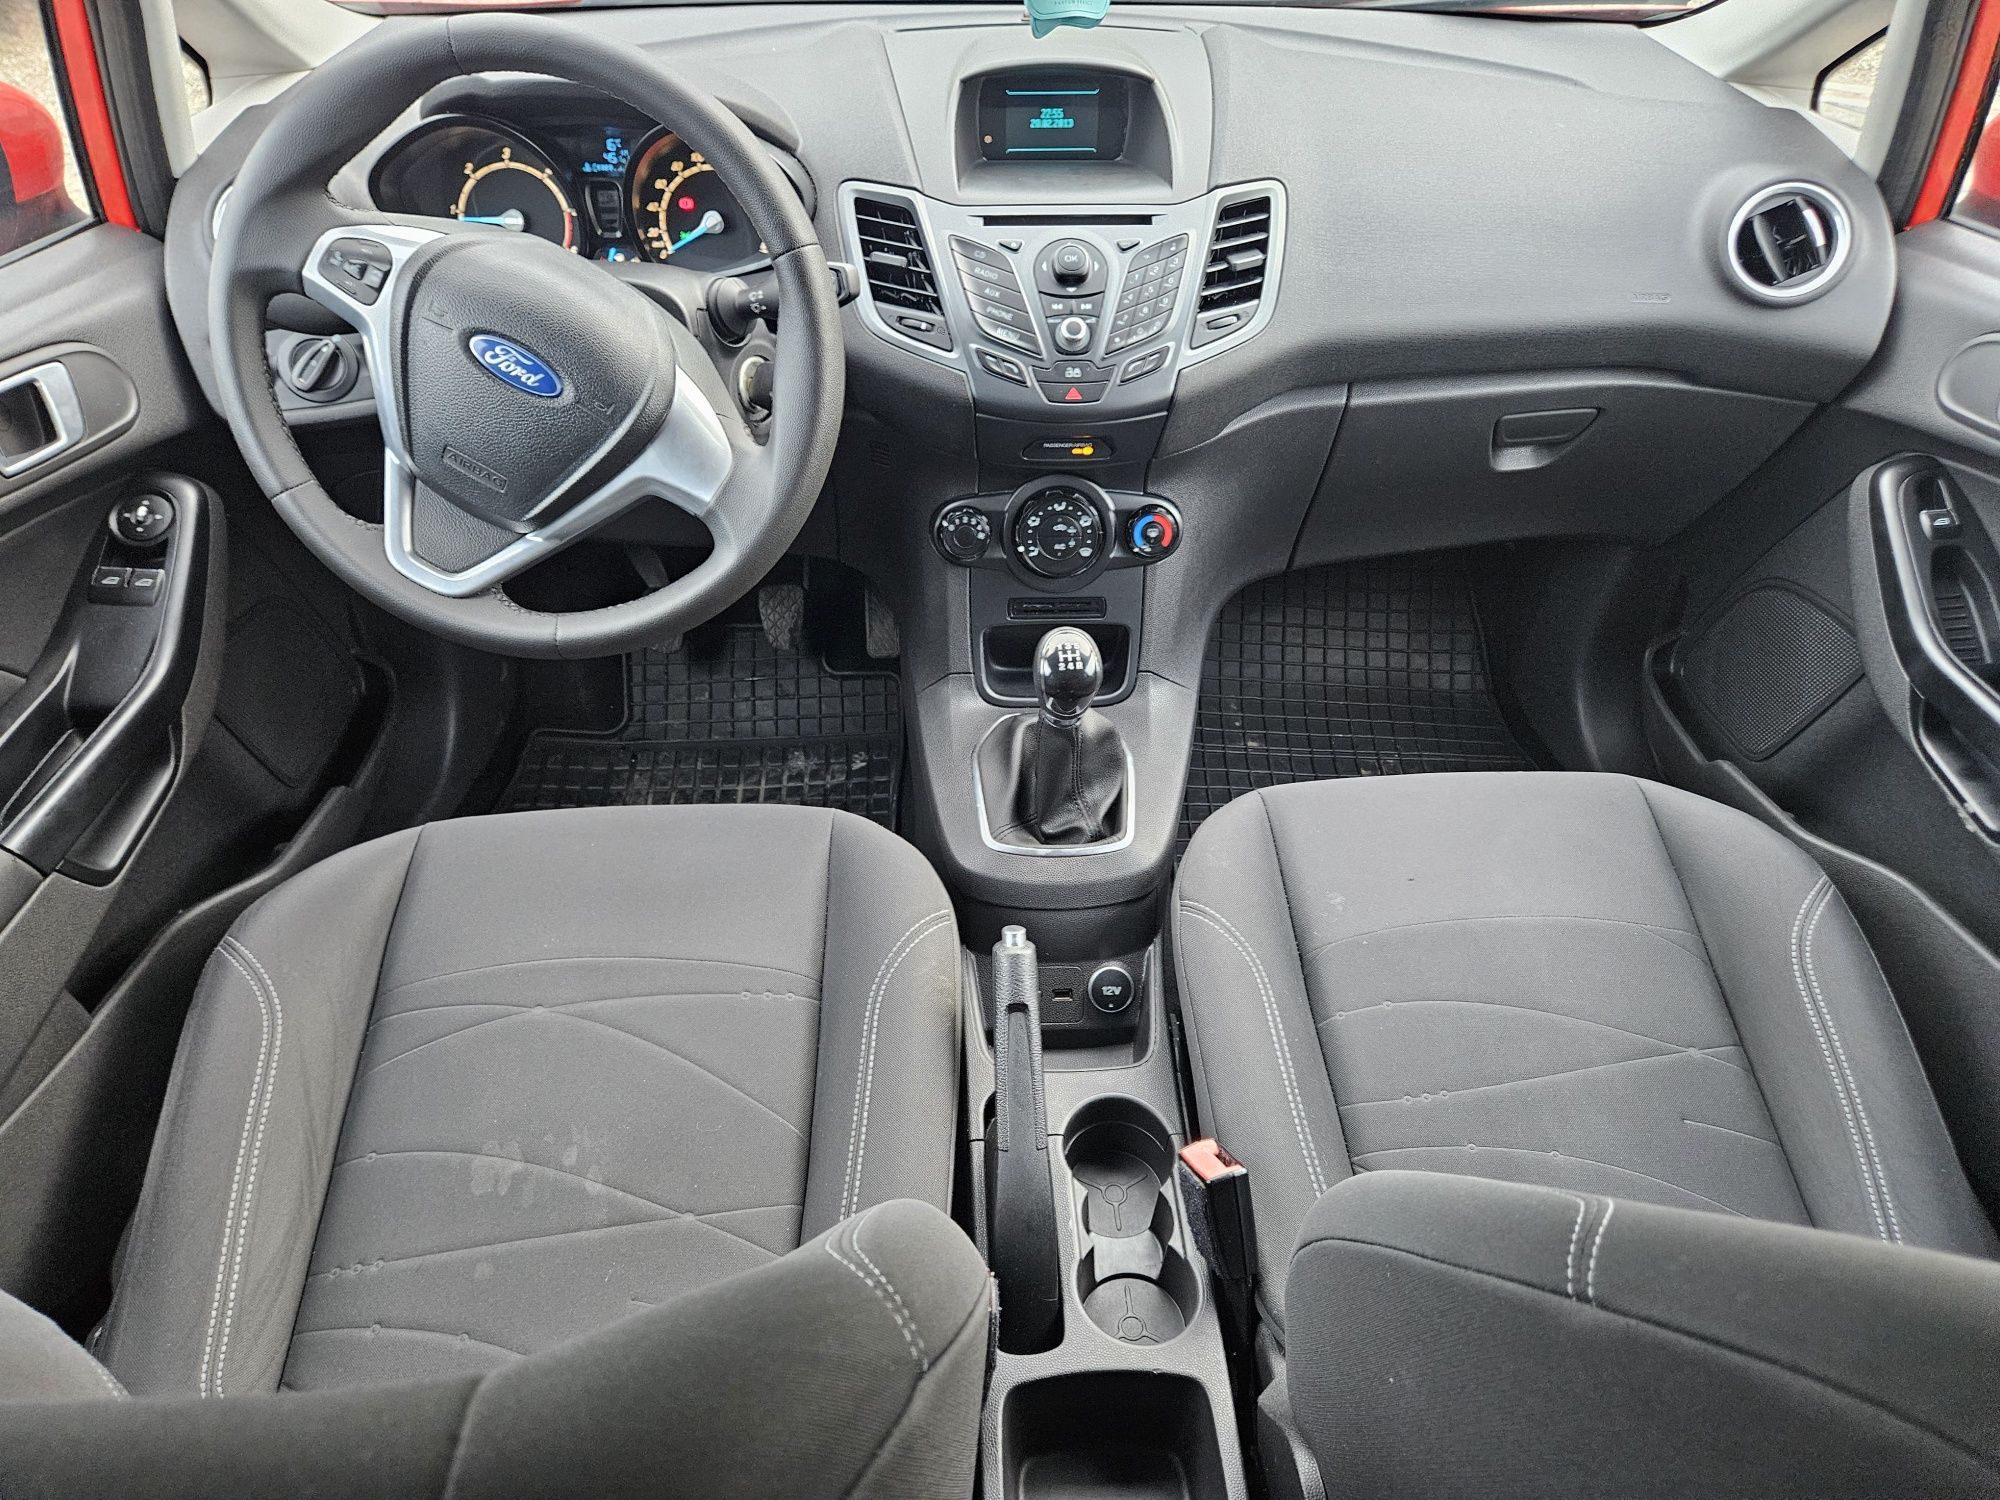 Ford Fiesta 1.5 disel din 2013 !